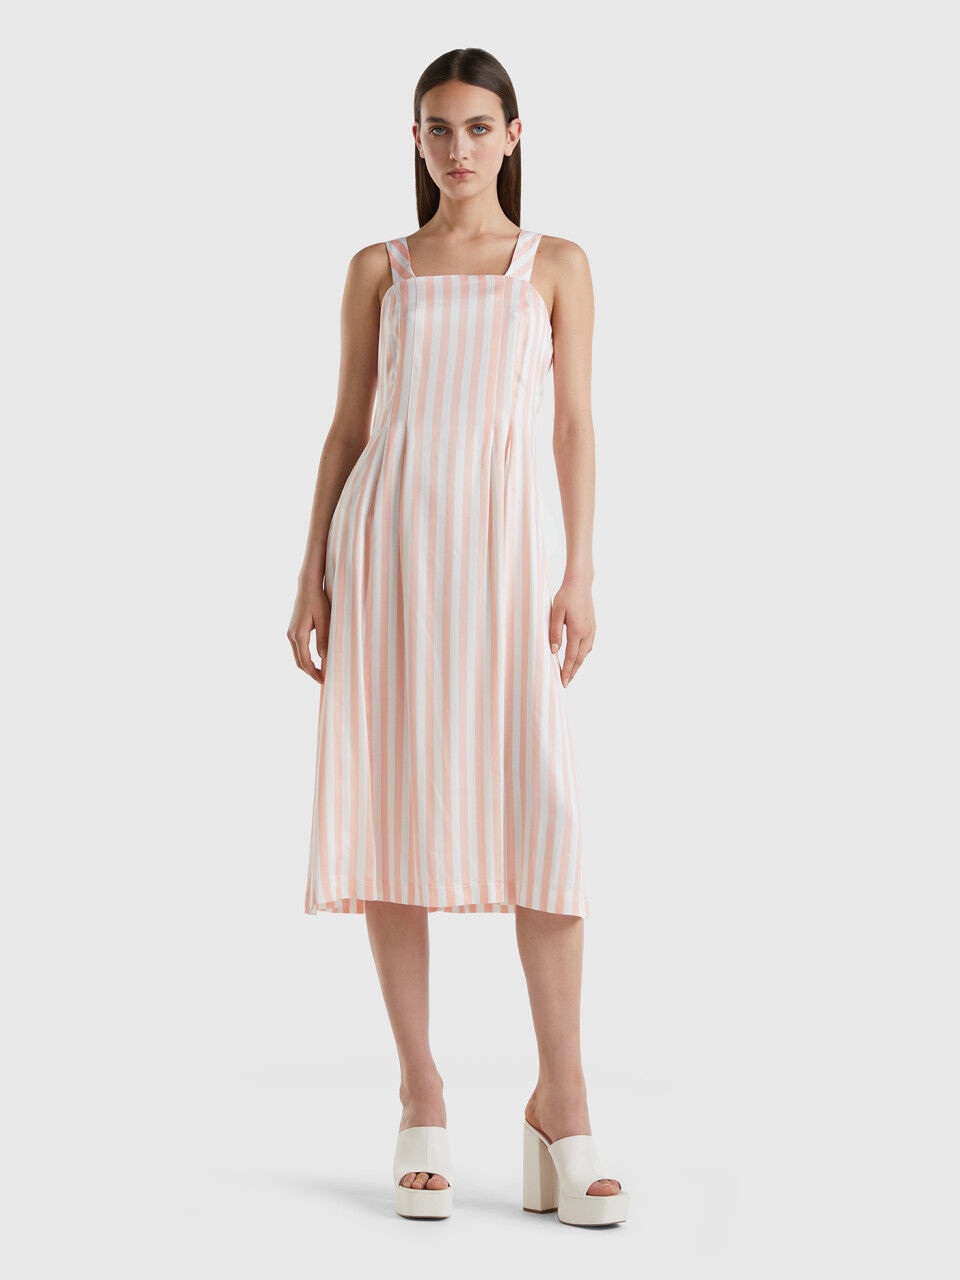 Flowy dress with print and stripes